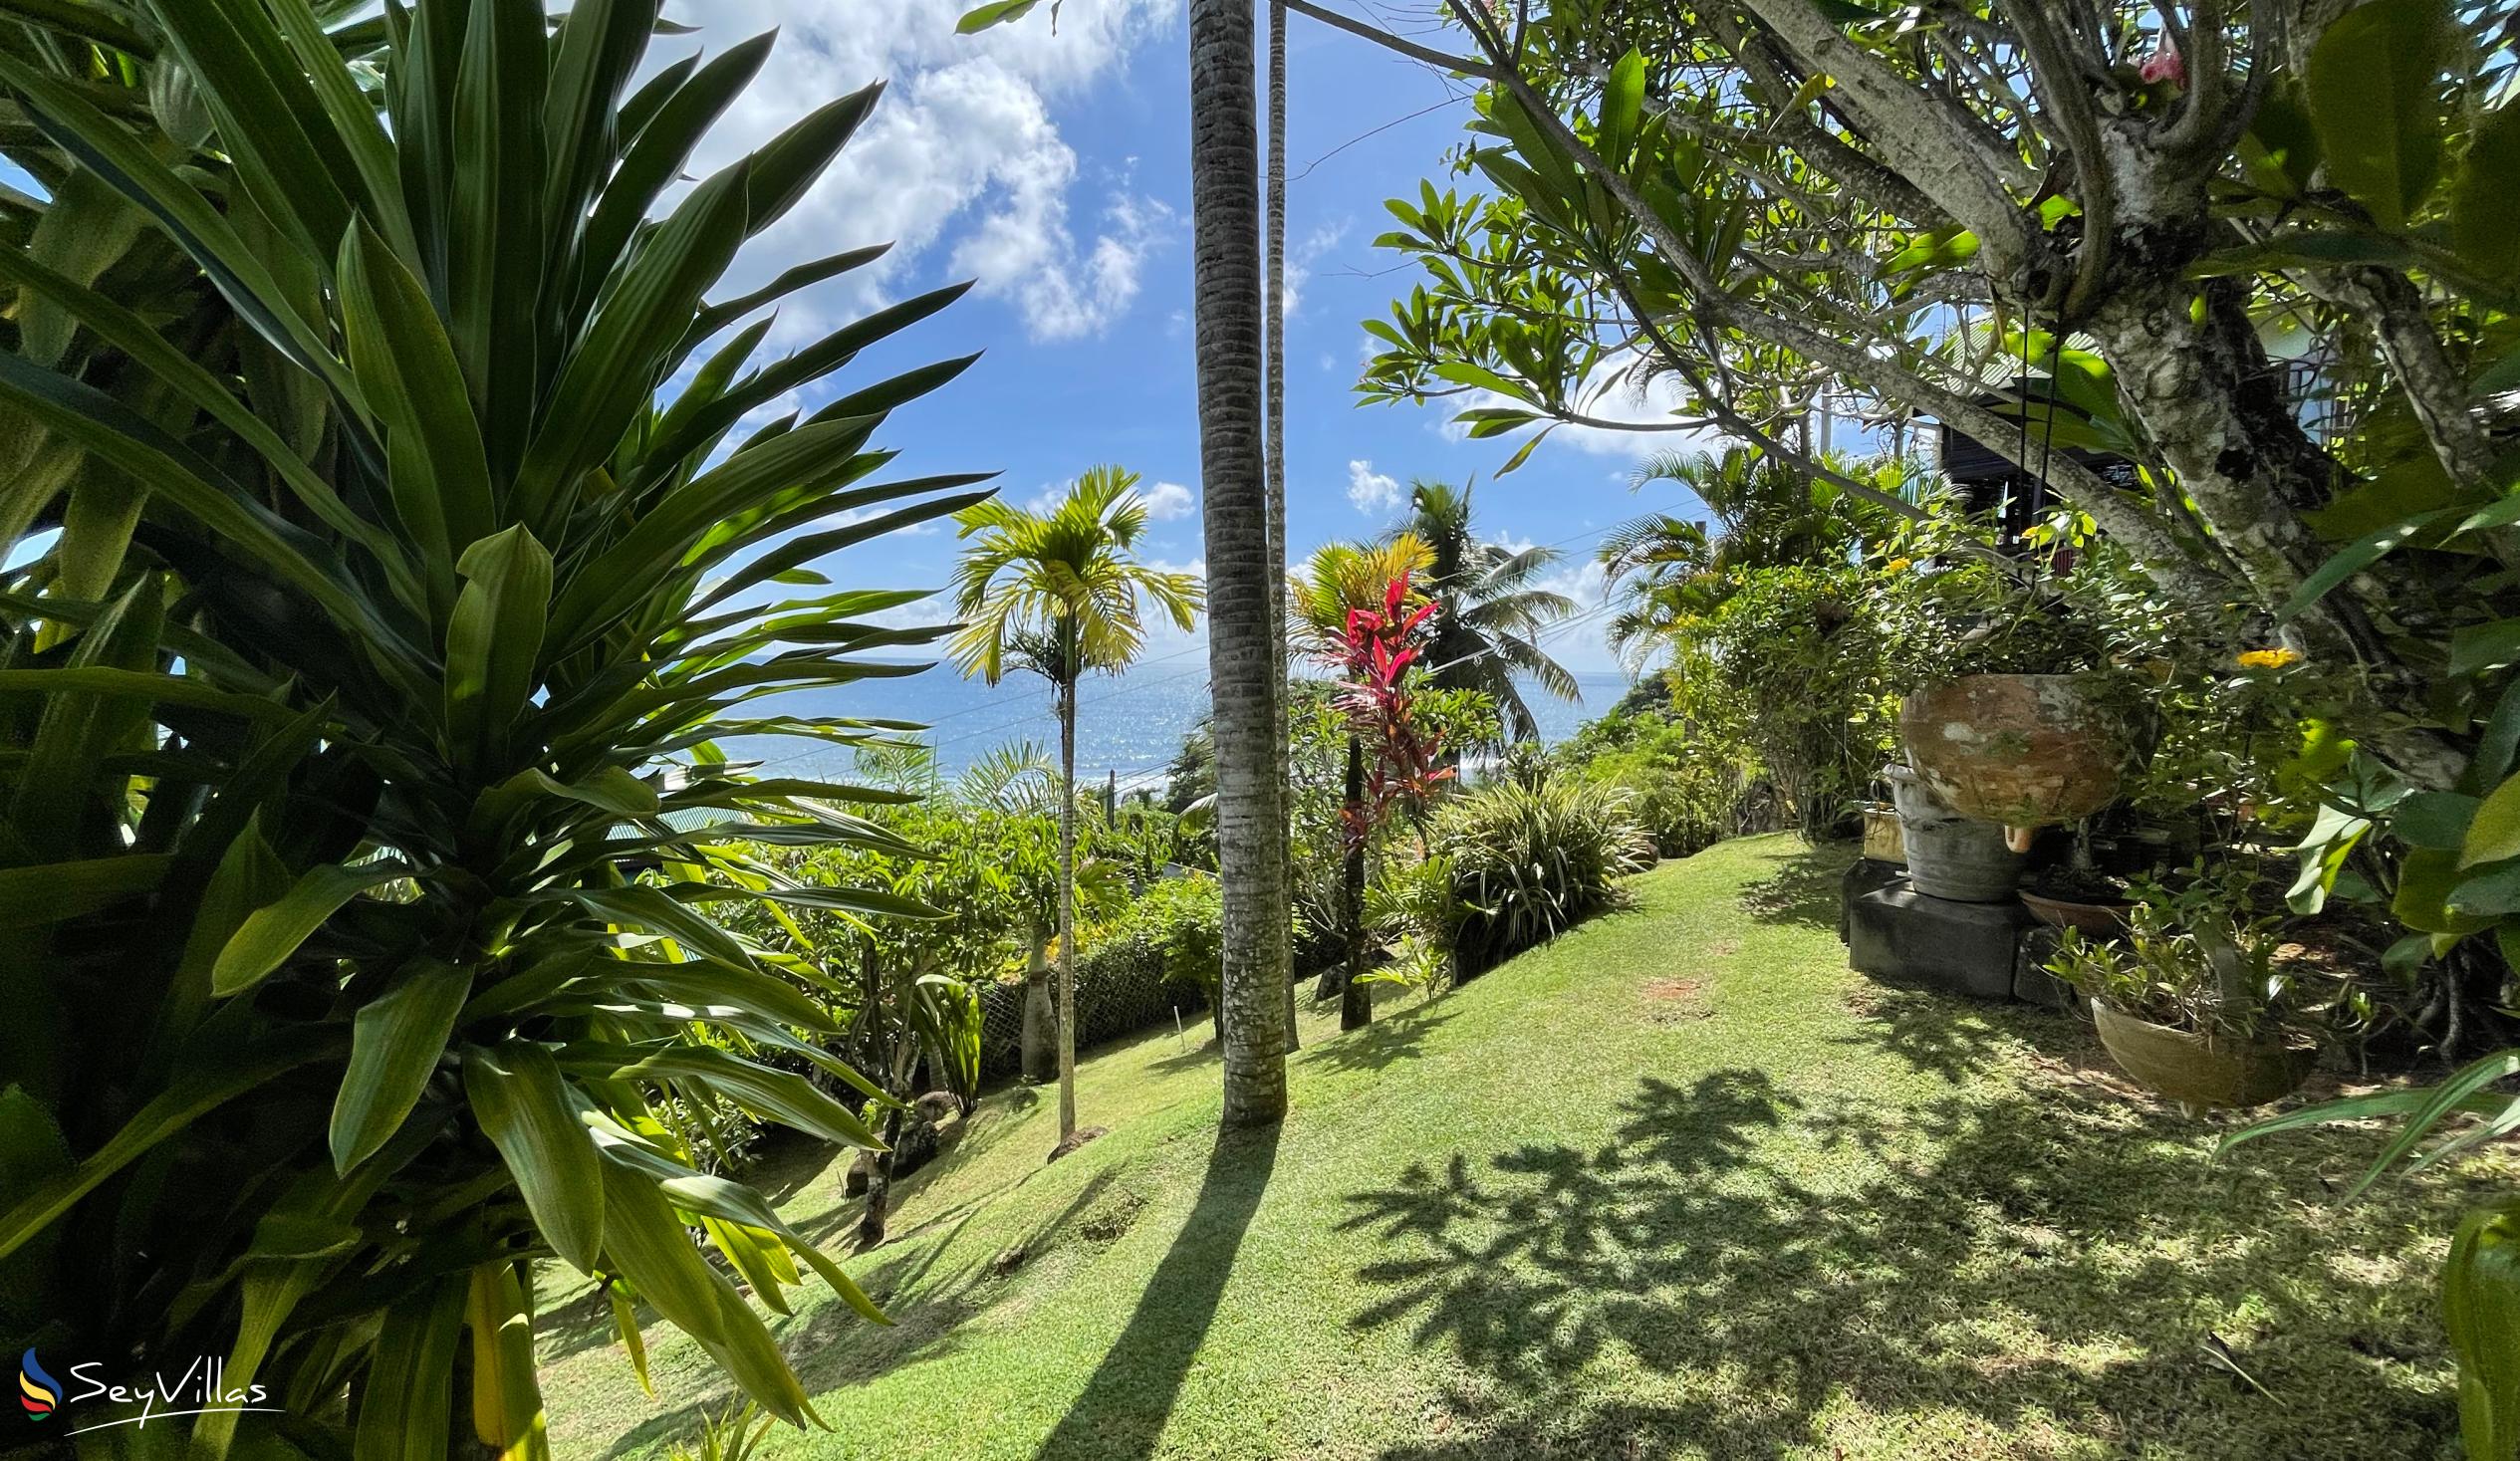 Photo 71: Chalets Bougainville - Outdoor area - Mahé (Seychelles)